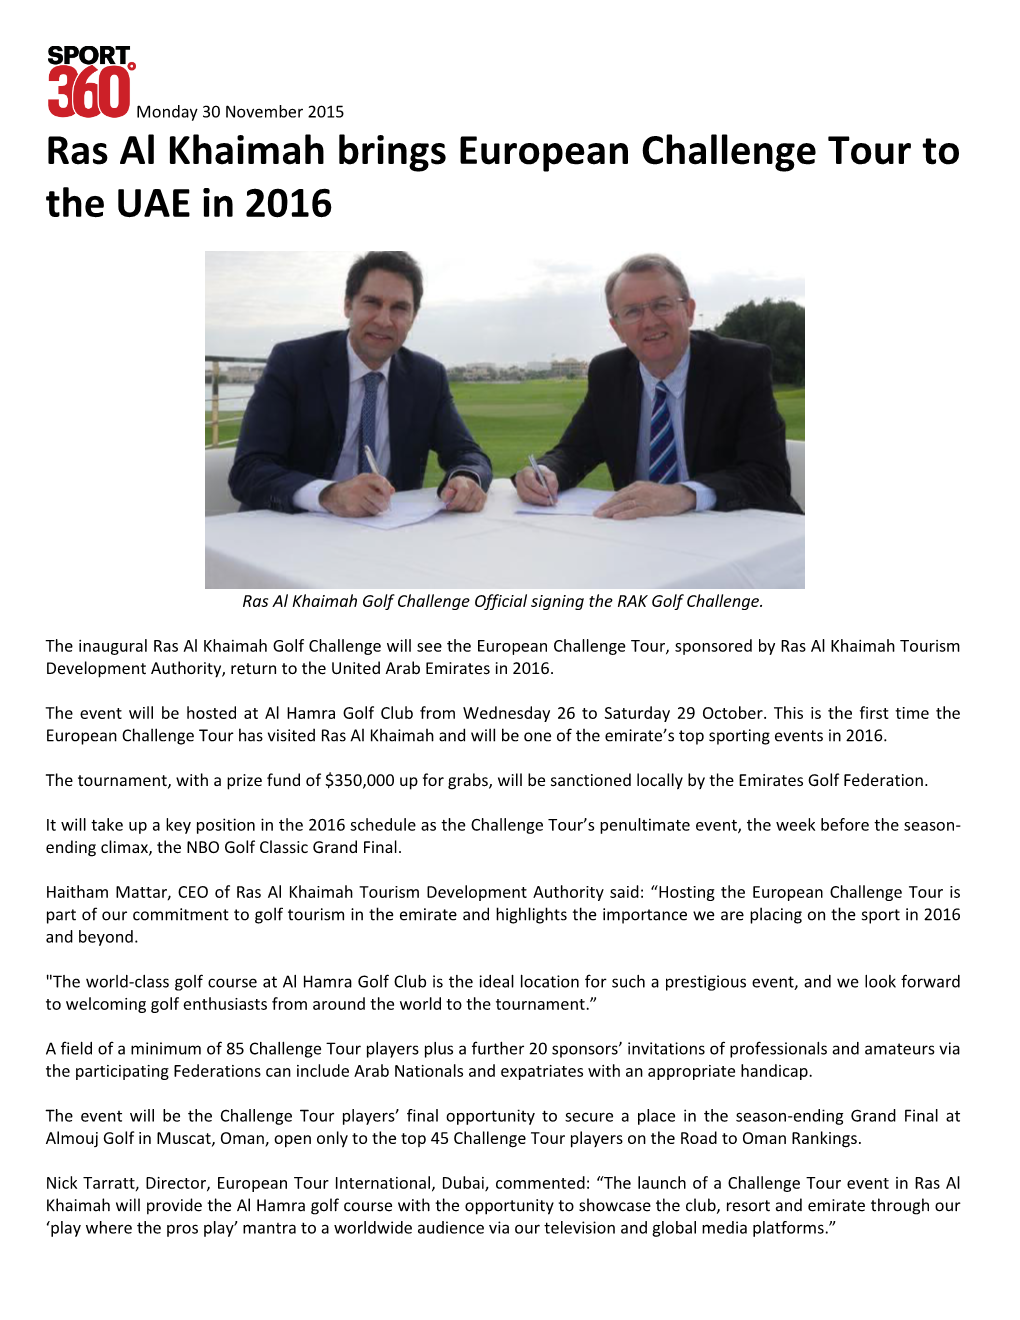 Ras Al Khaimah Brings European Challenge Tour to the UAE in 2016